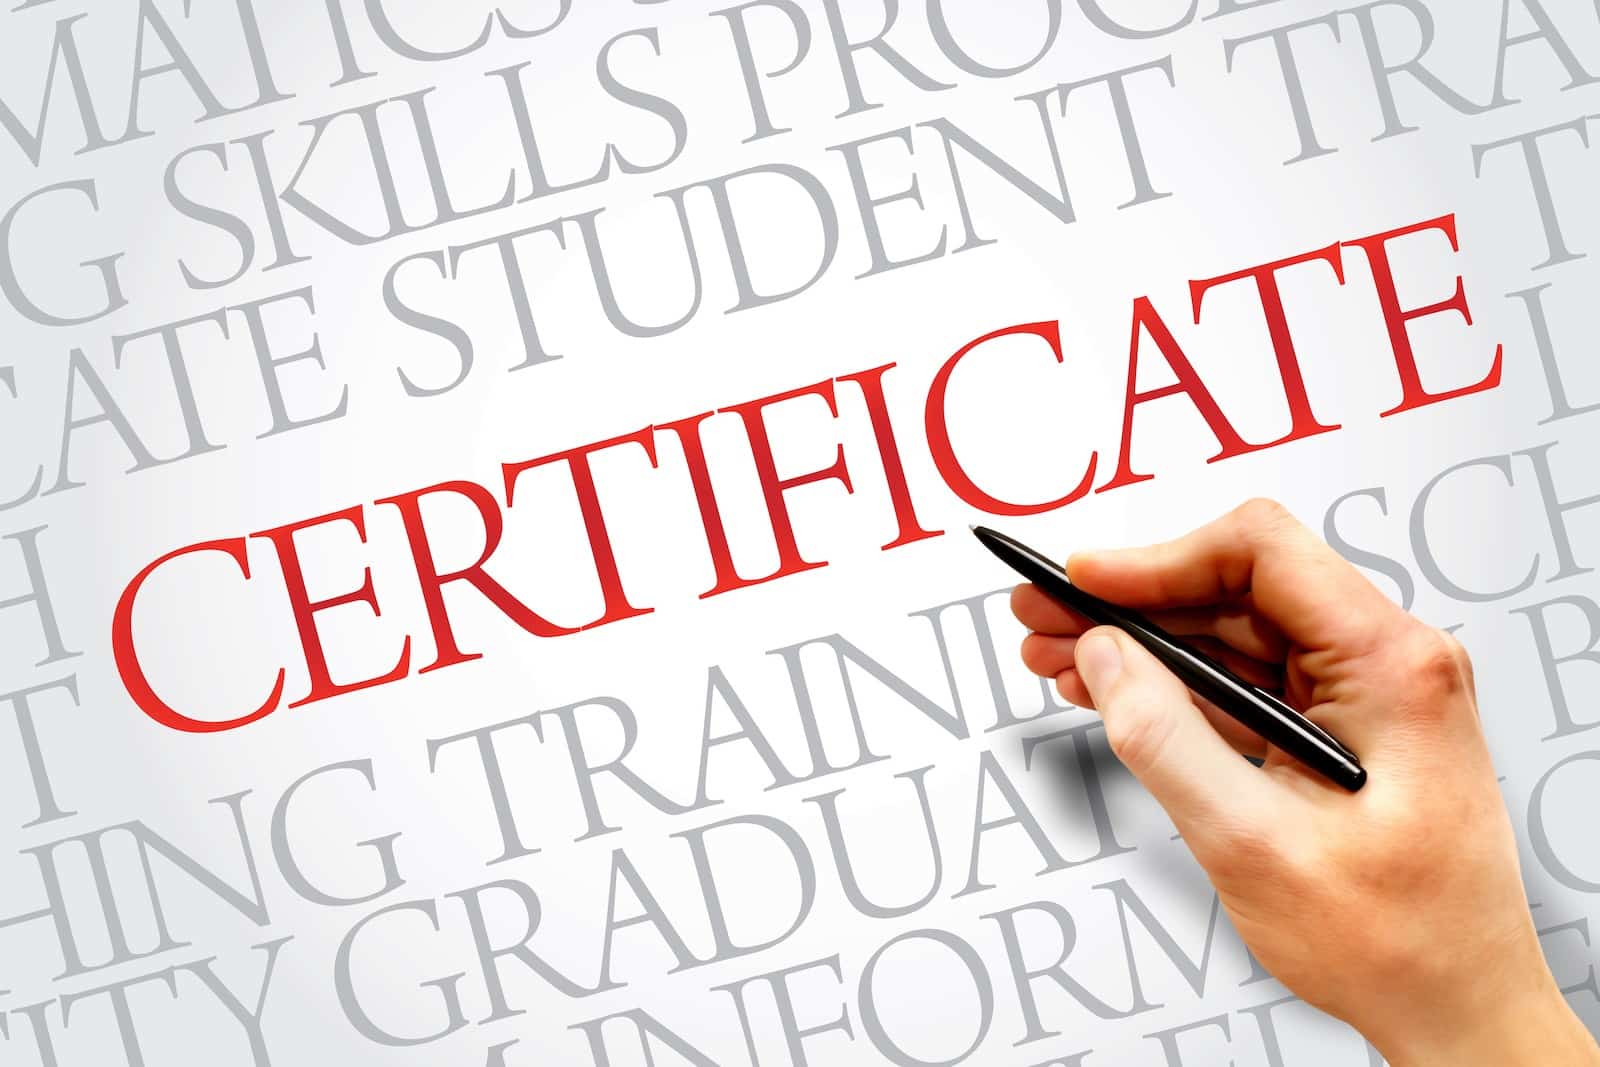 Skills Certificate